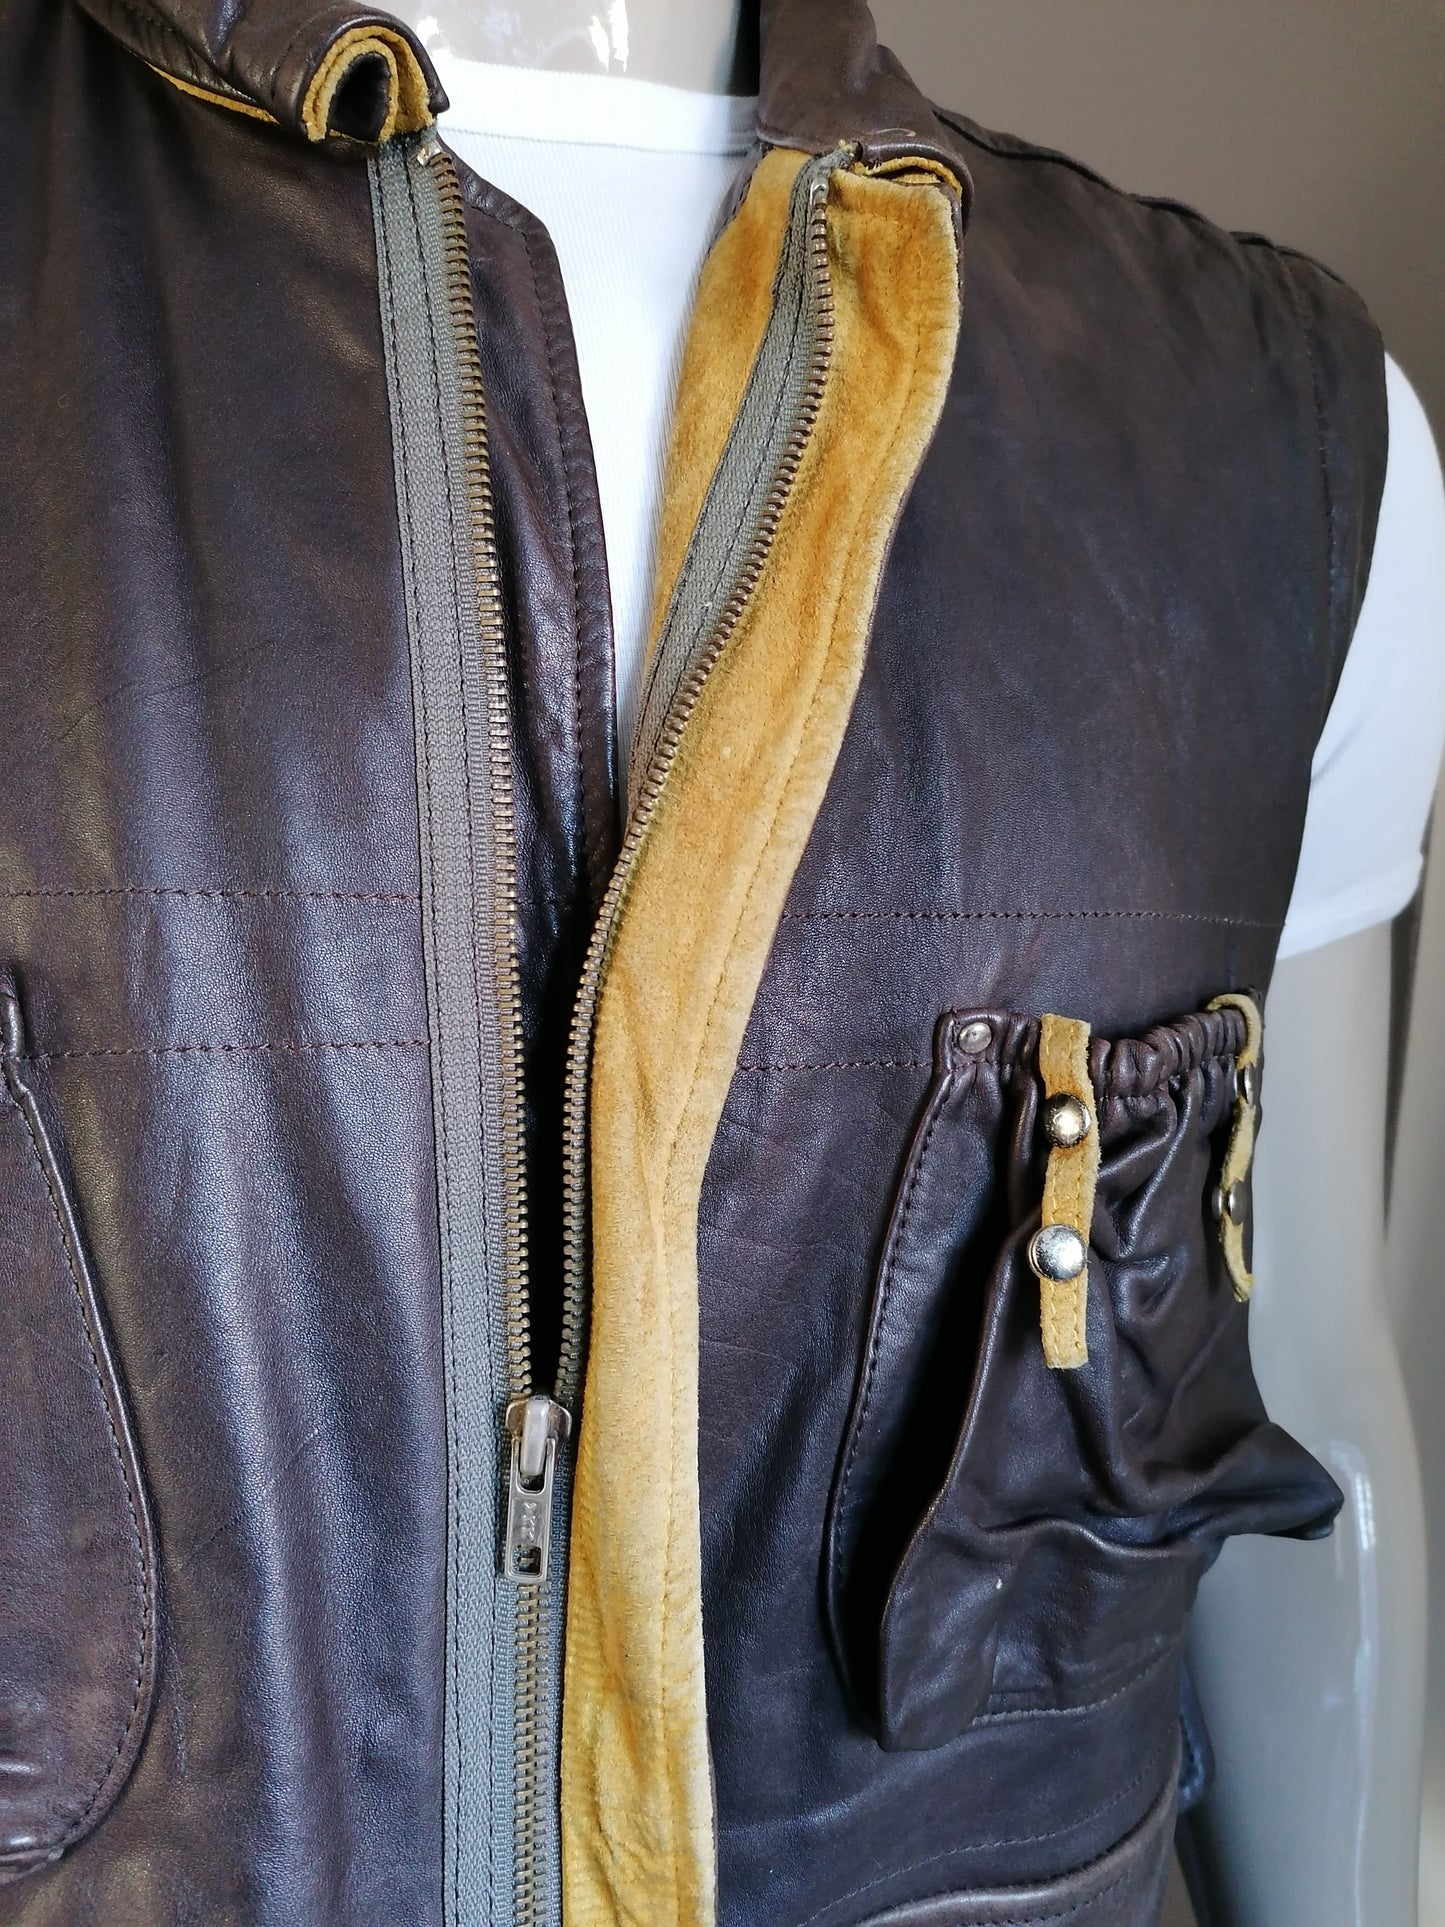 Vintage Shark leather body warmer with zipper. Dark brown. Size XL.